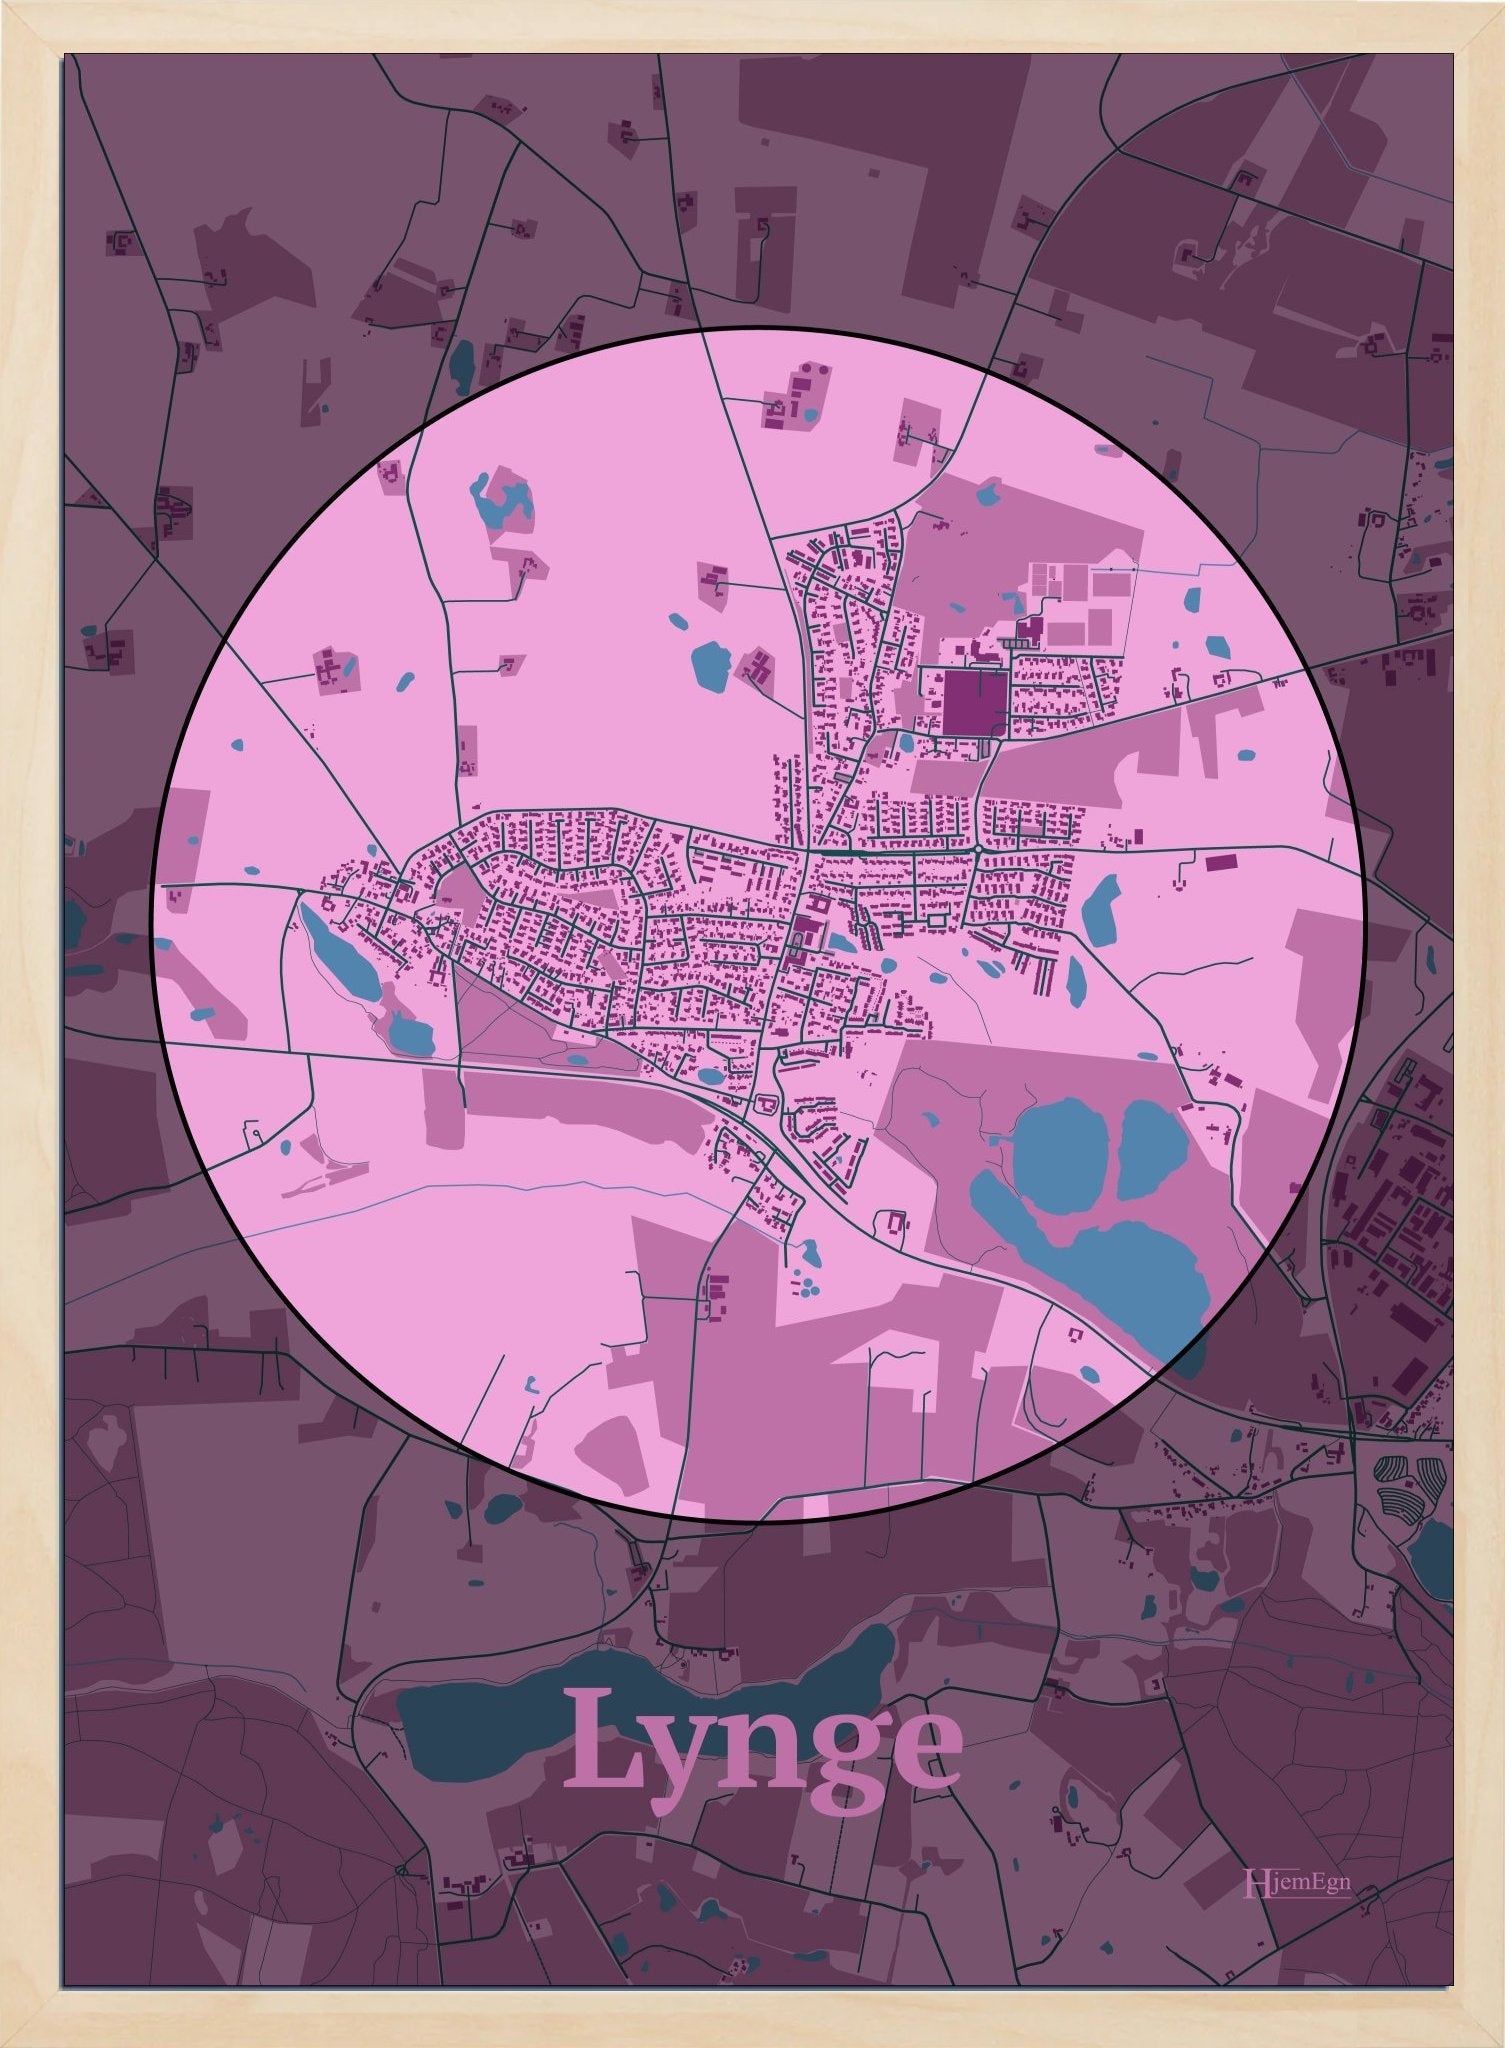 Lynge plakat i farve pastel rød og HjemEgn.dk design centrum. Design bykort for Lynge